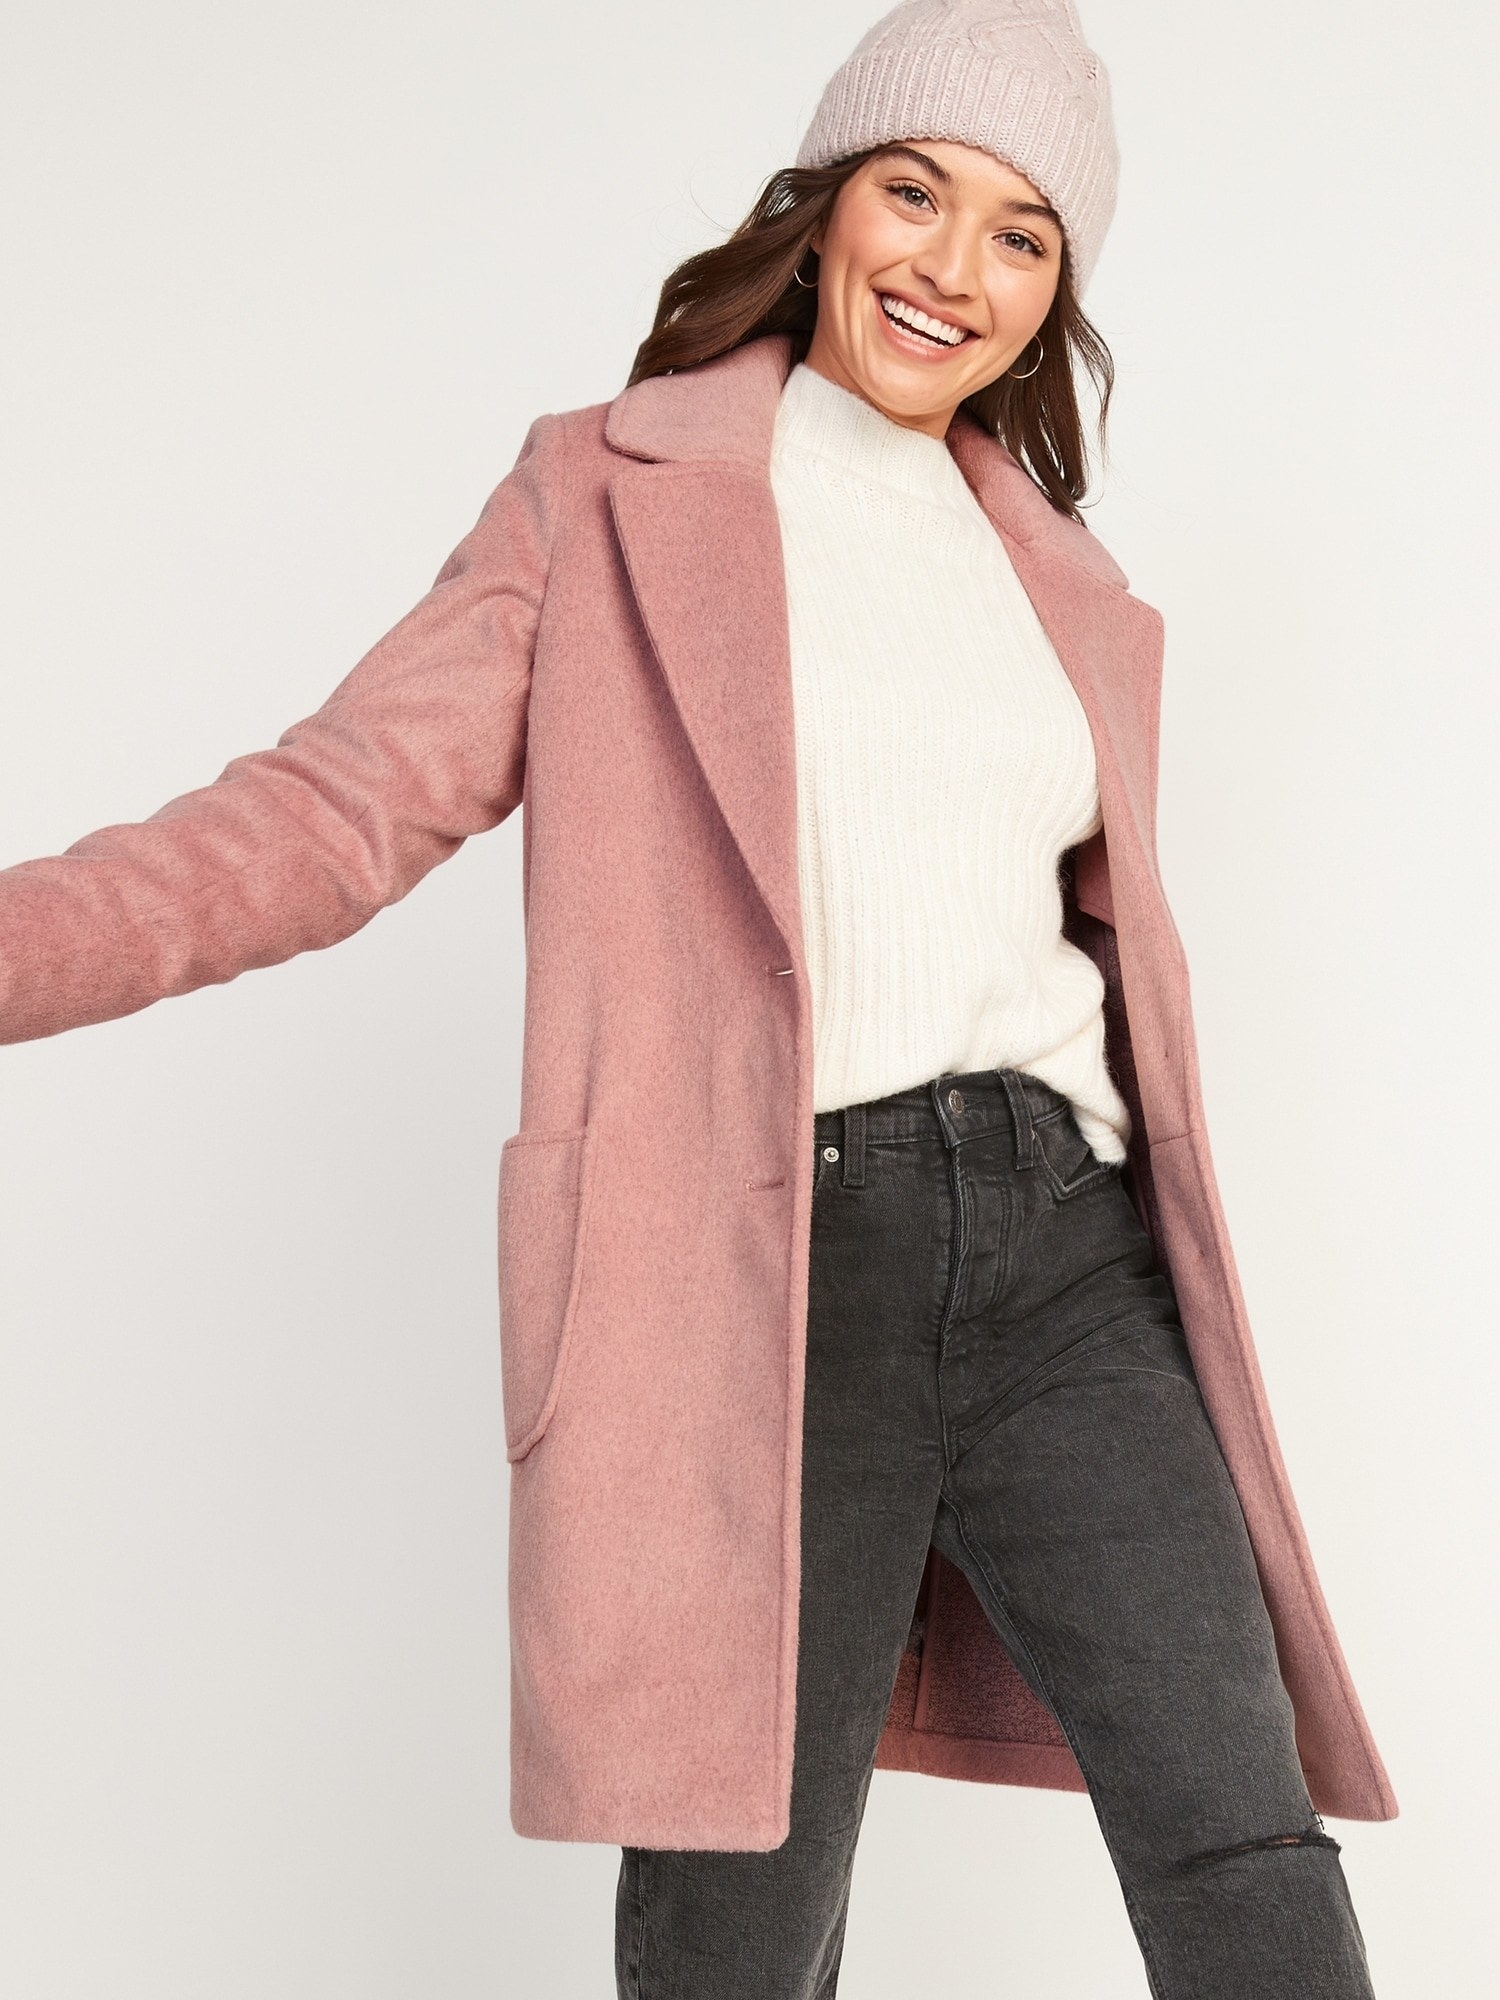 Model posing in pink coat